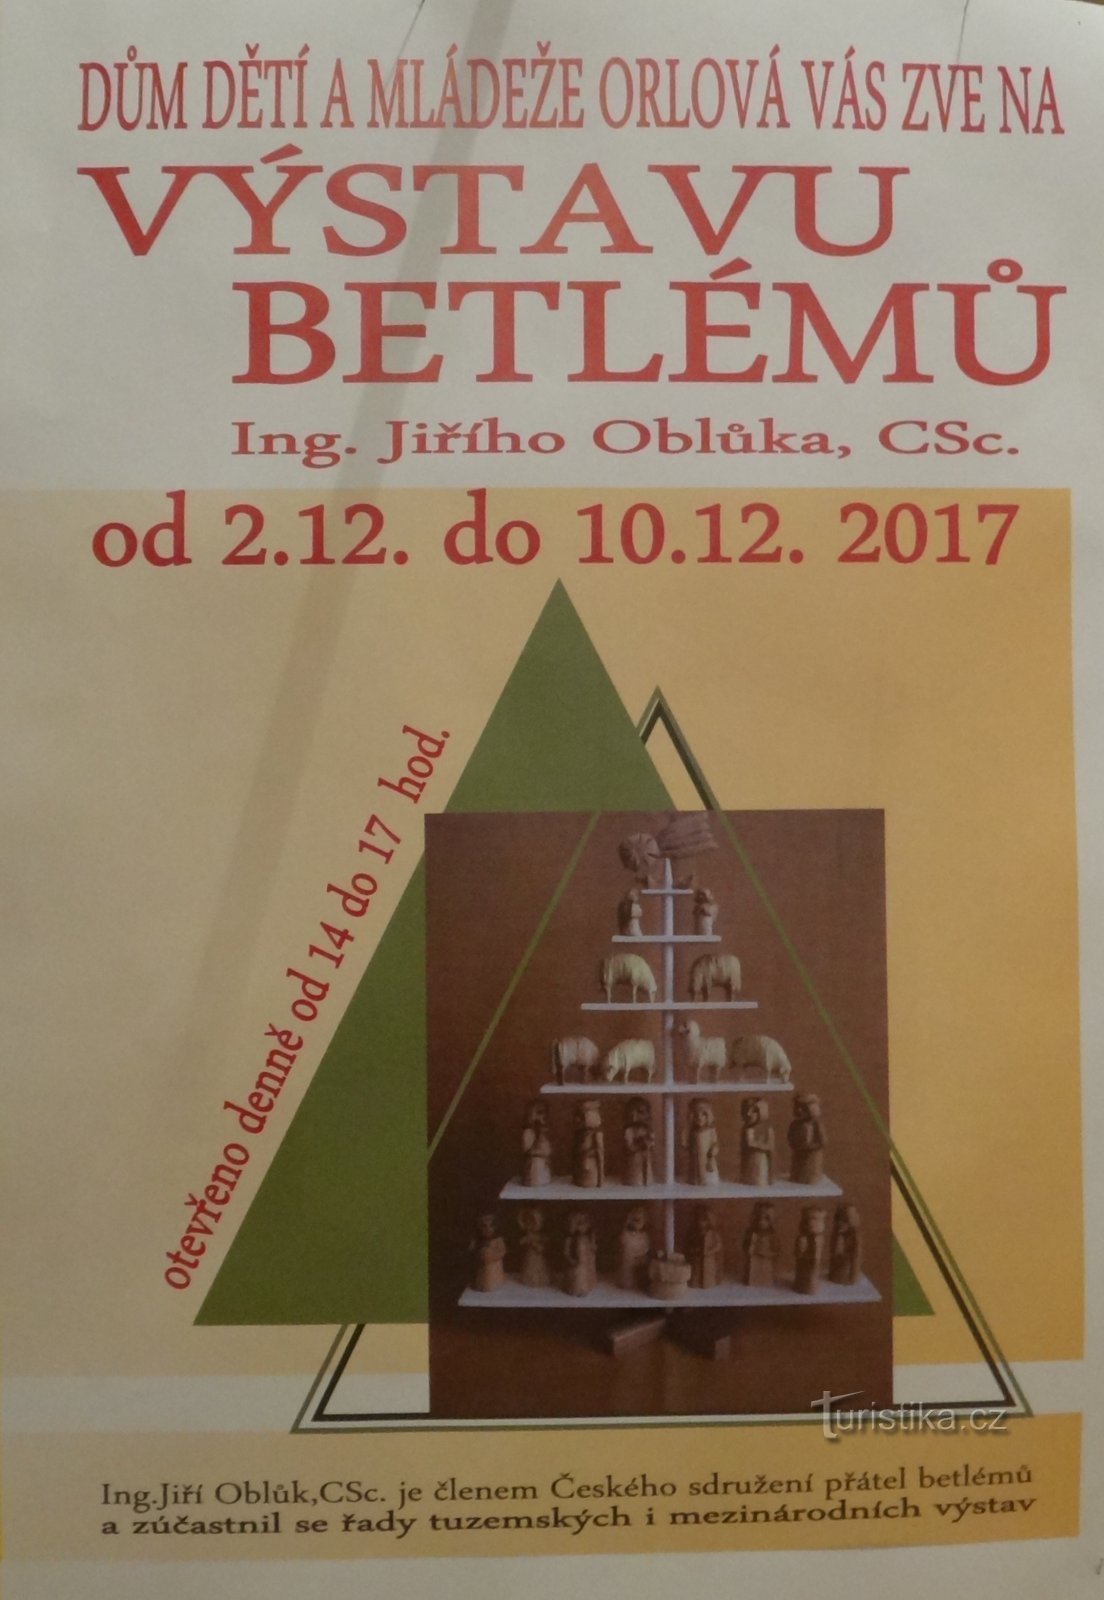 invitation to the exhibition